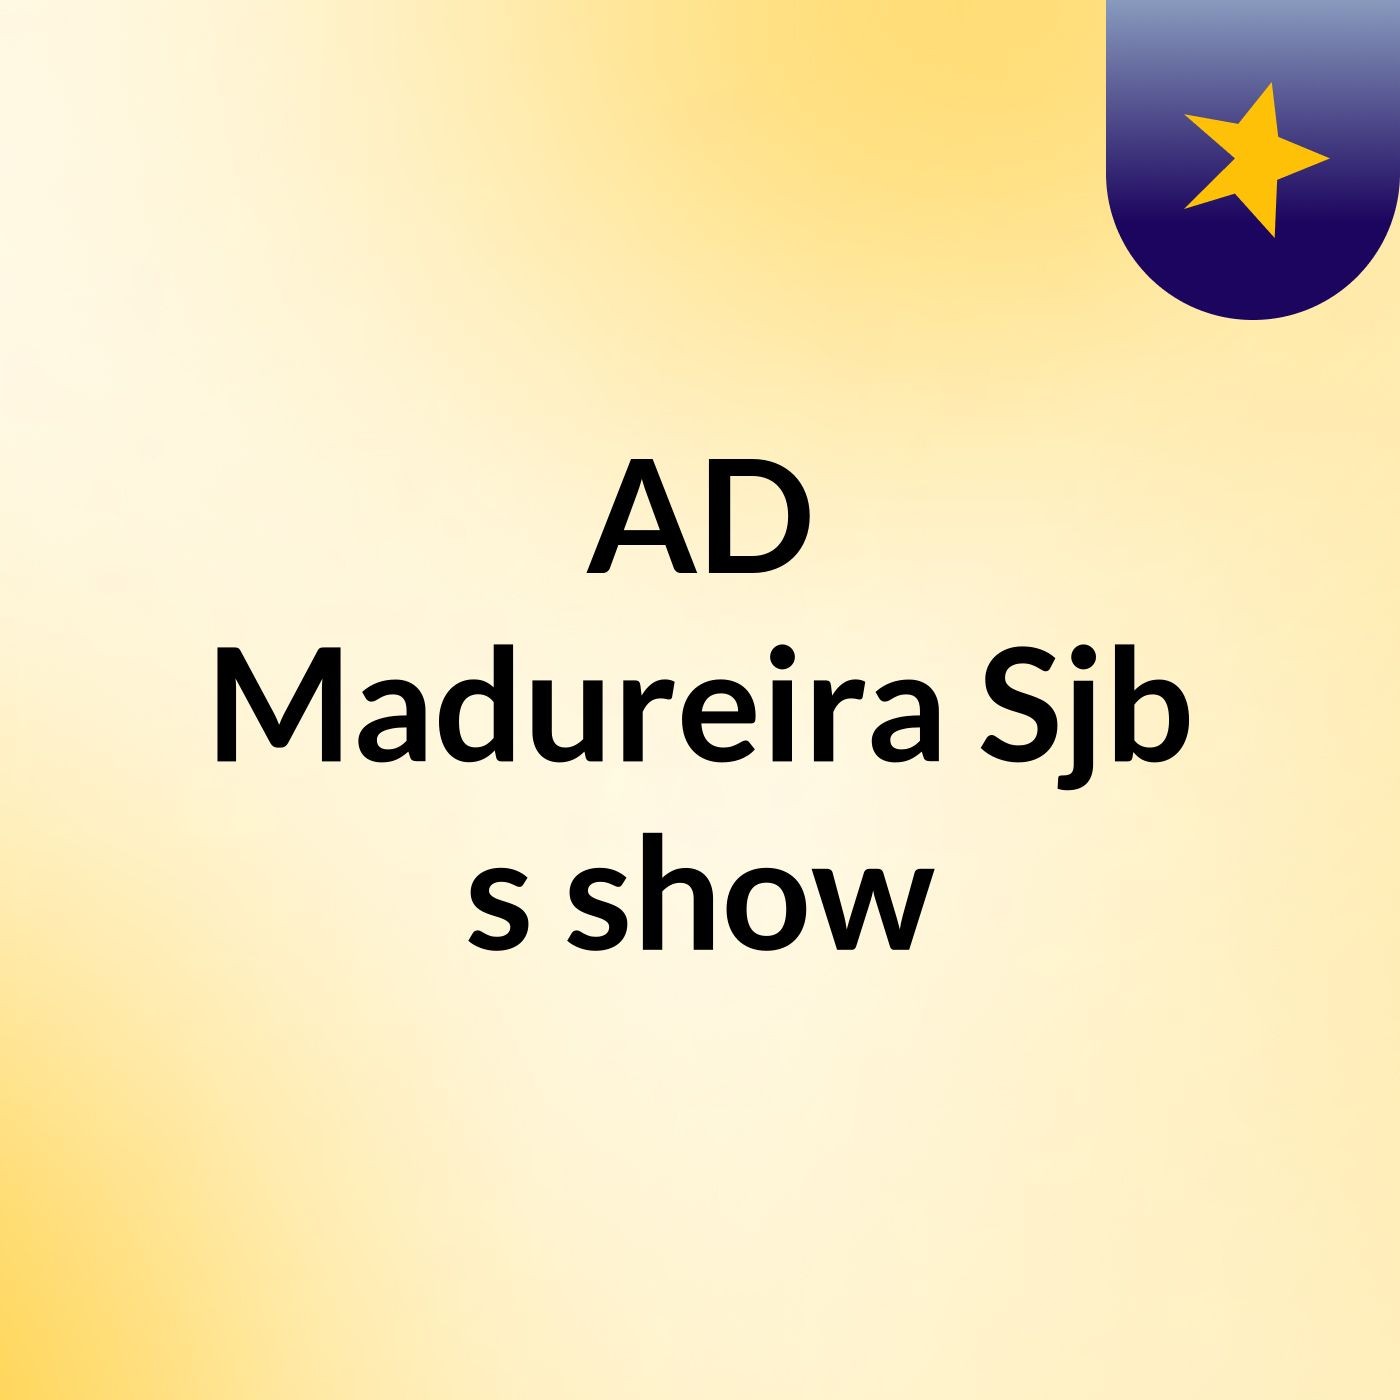 AD Madureira Sjb's show